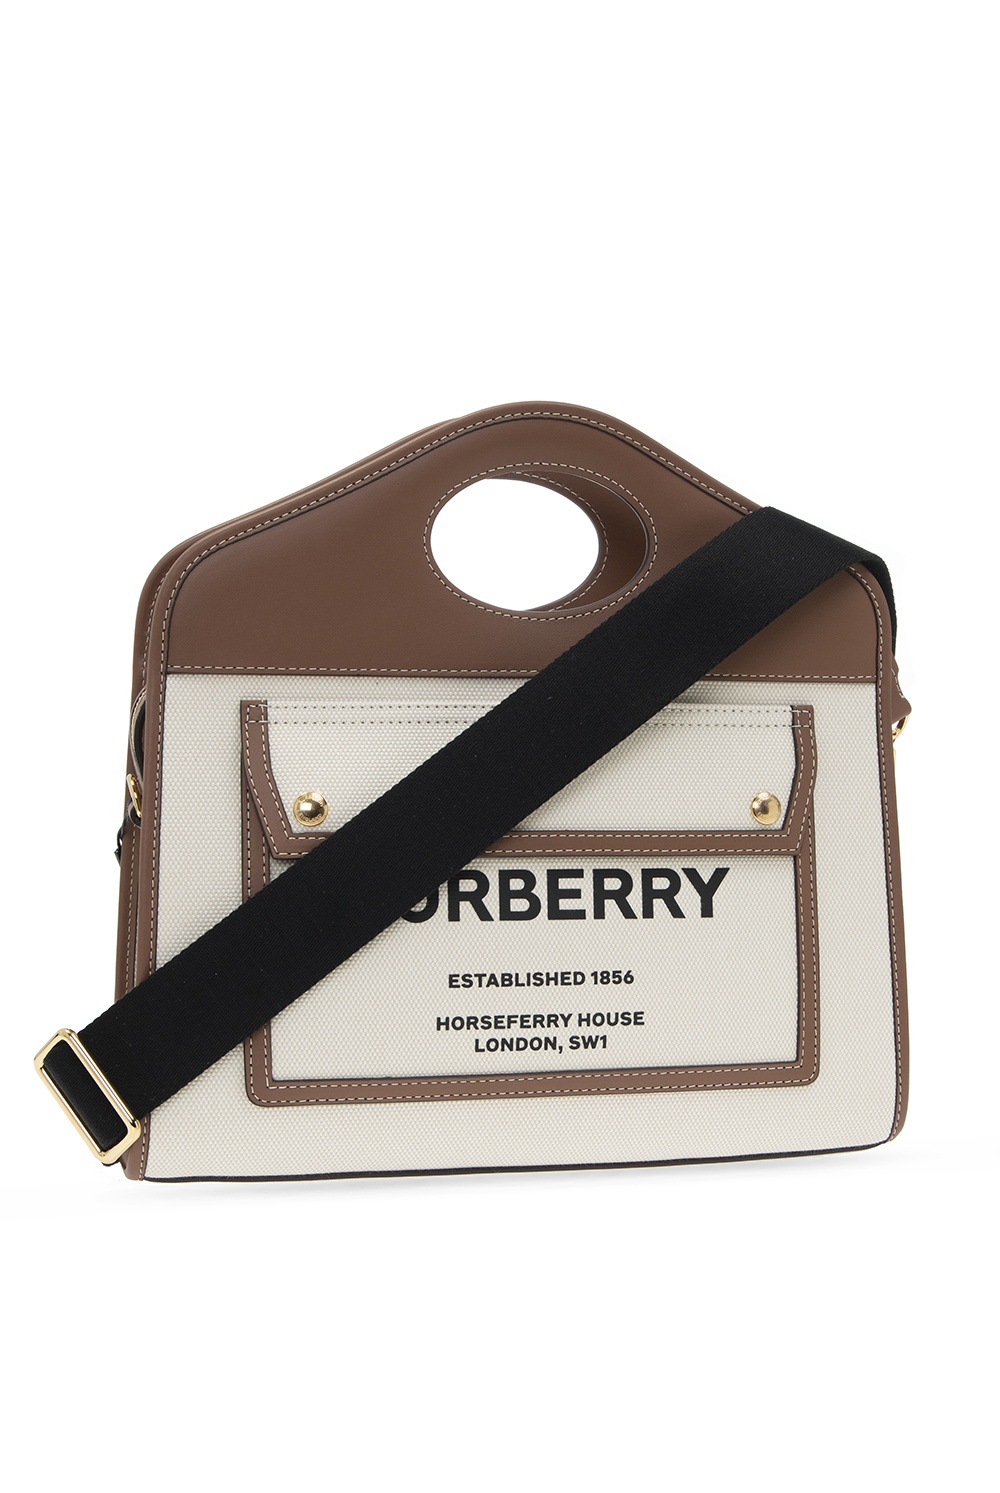 Burberry burberry reversible monogram cashmere scarf item